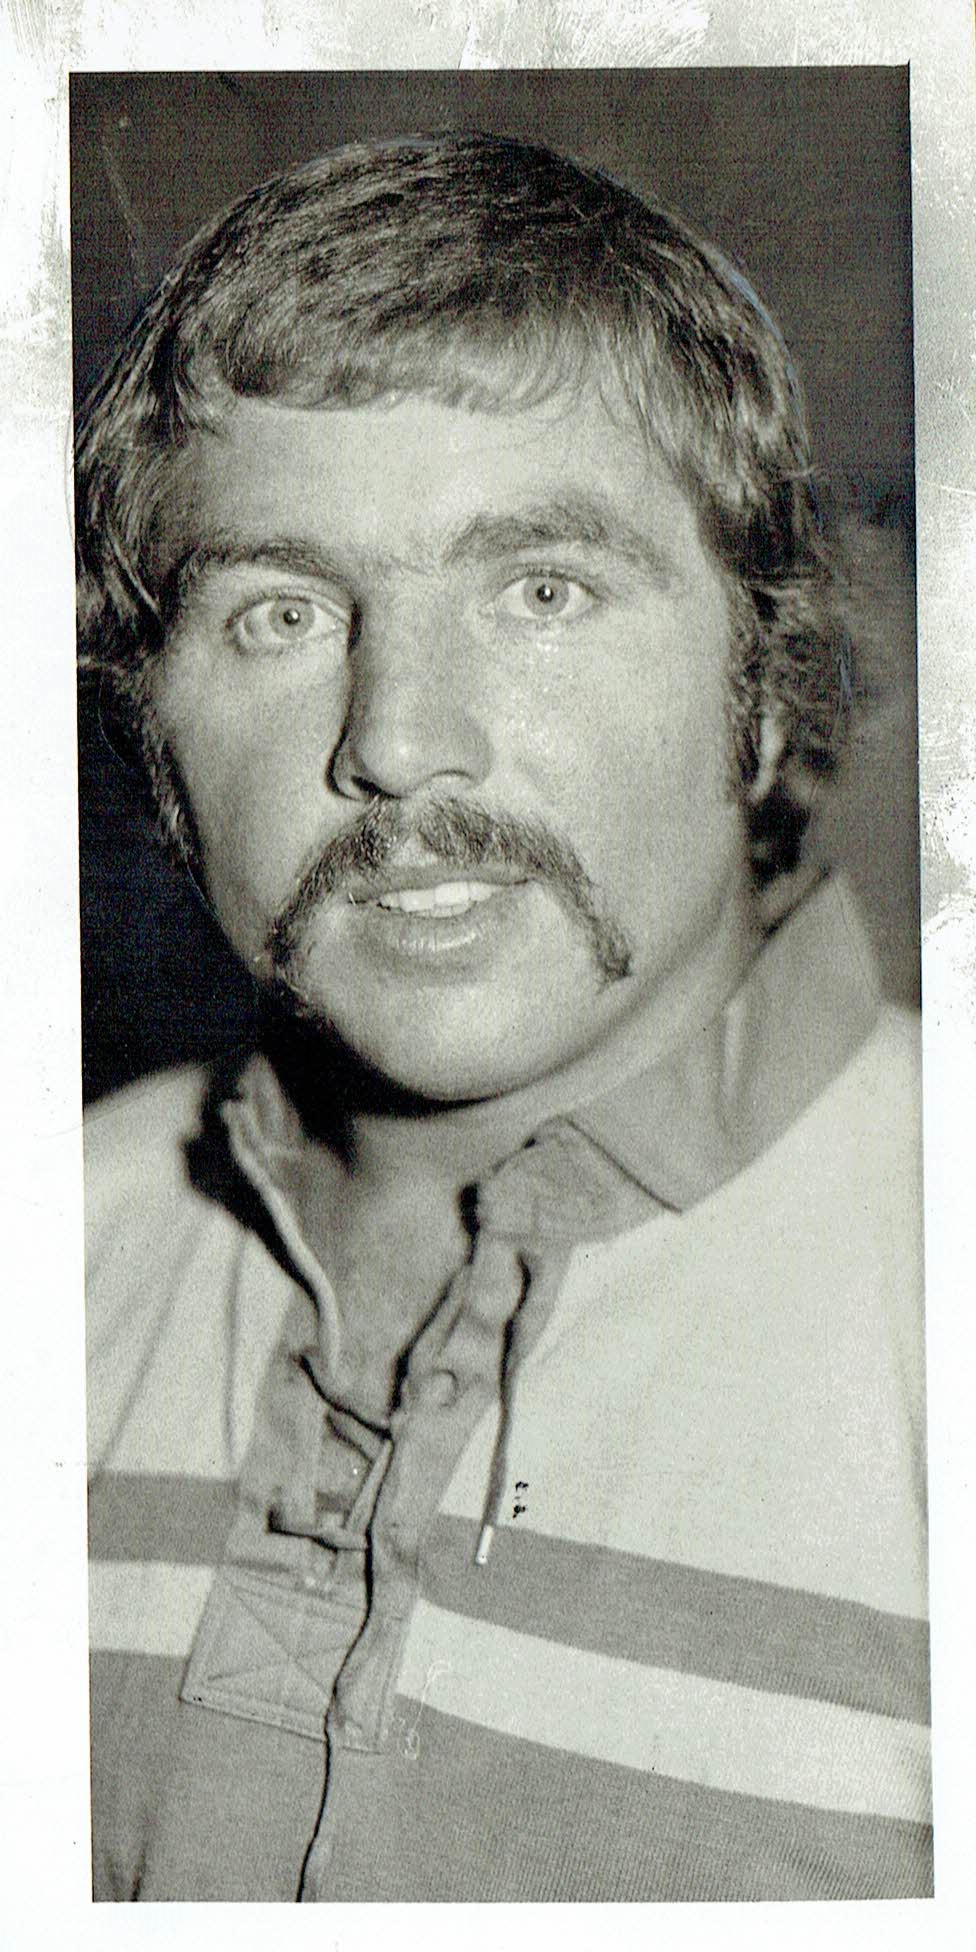 Garry Leo 1975.